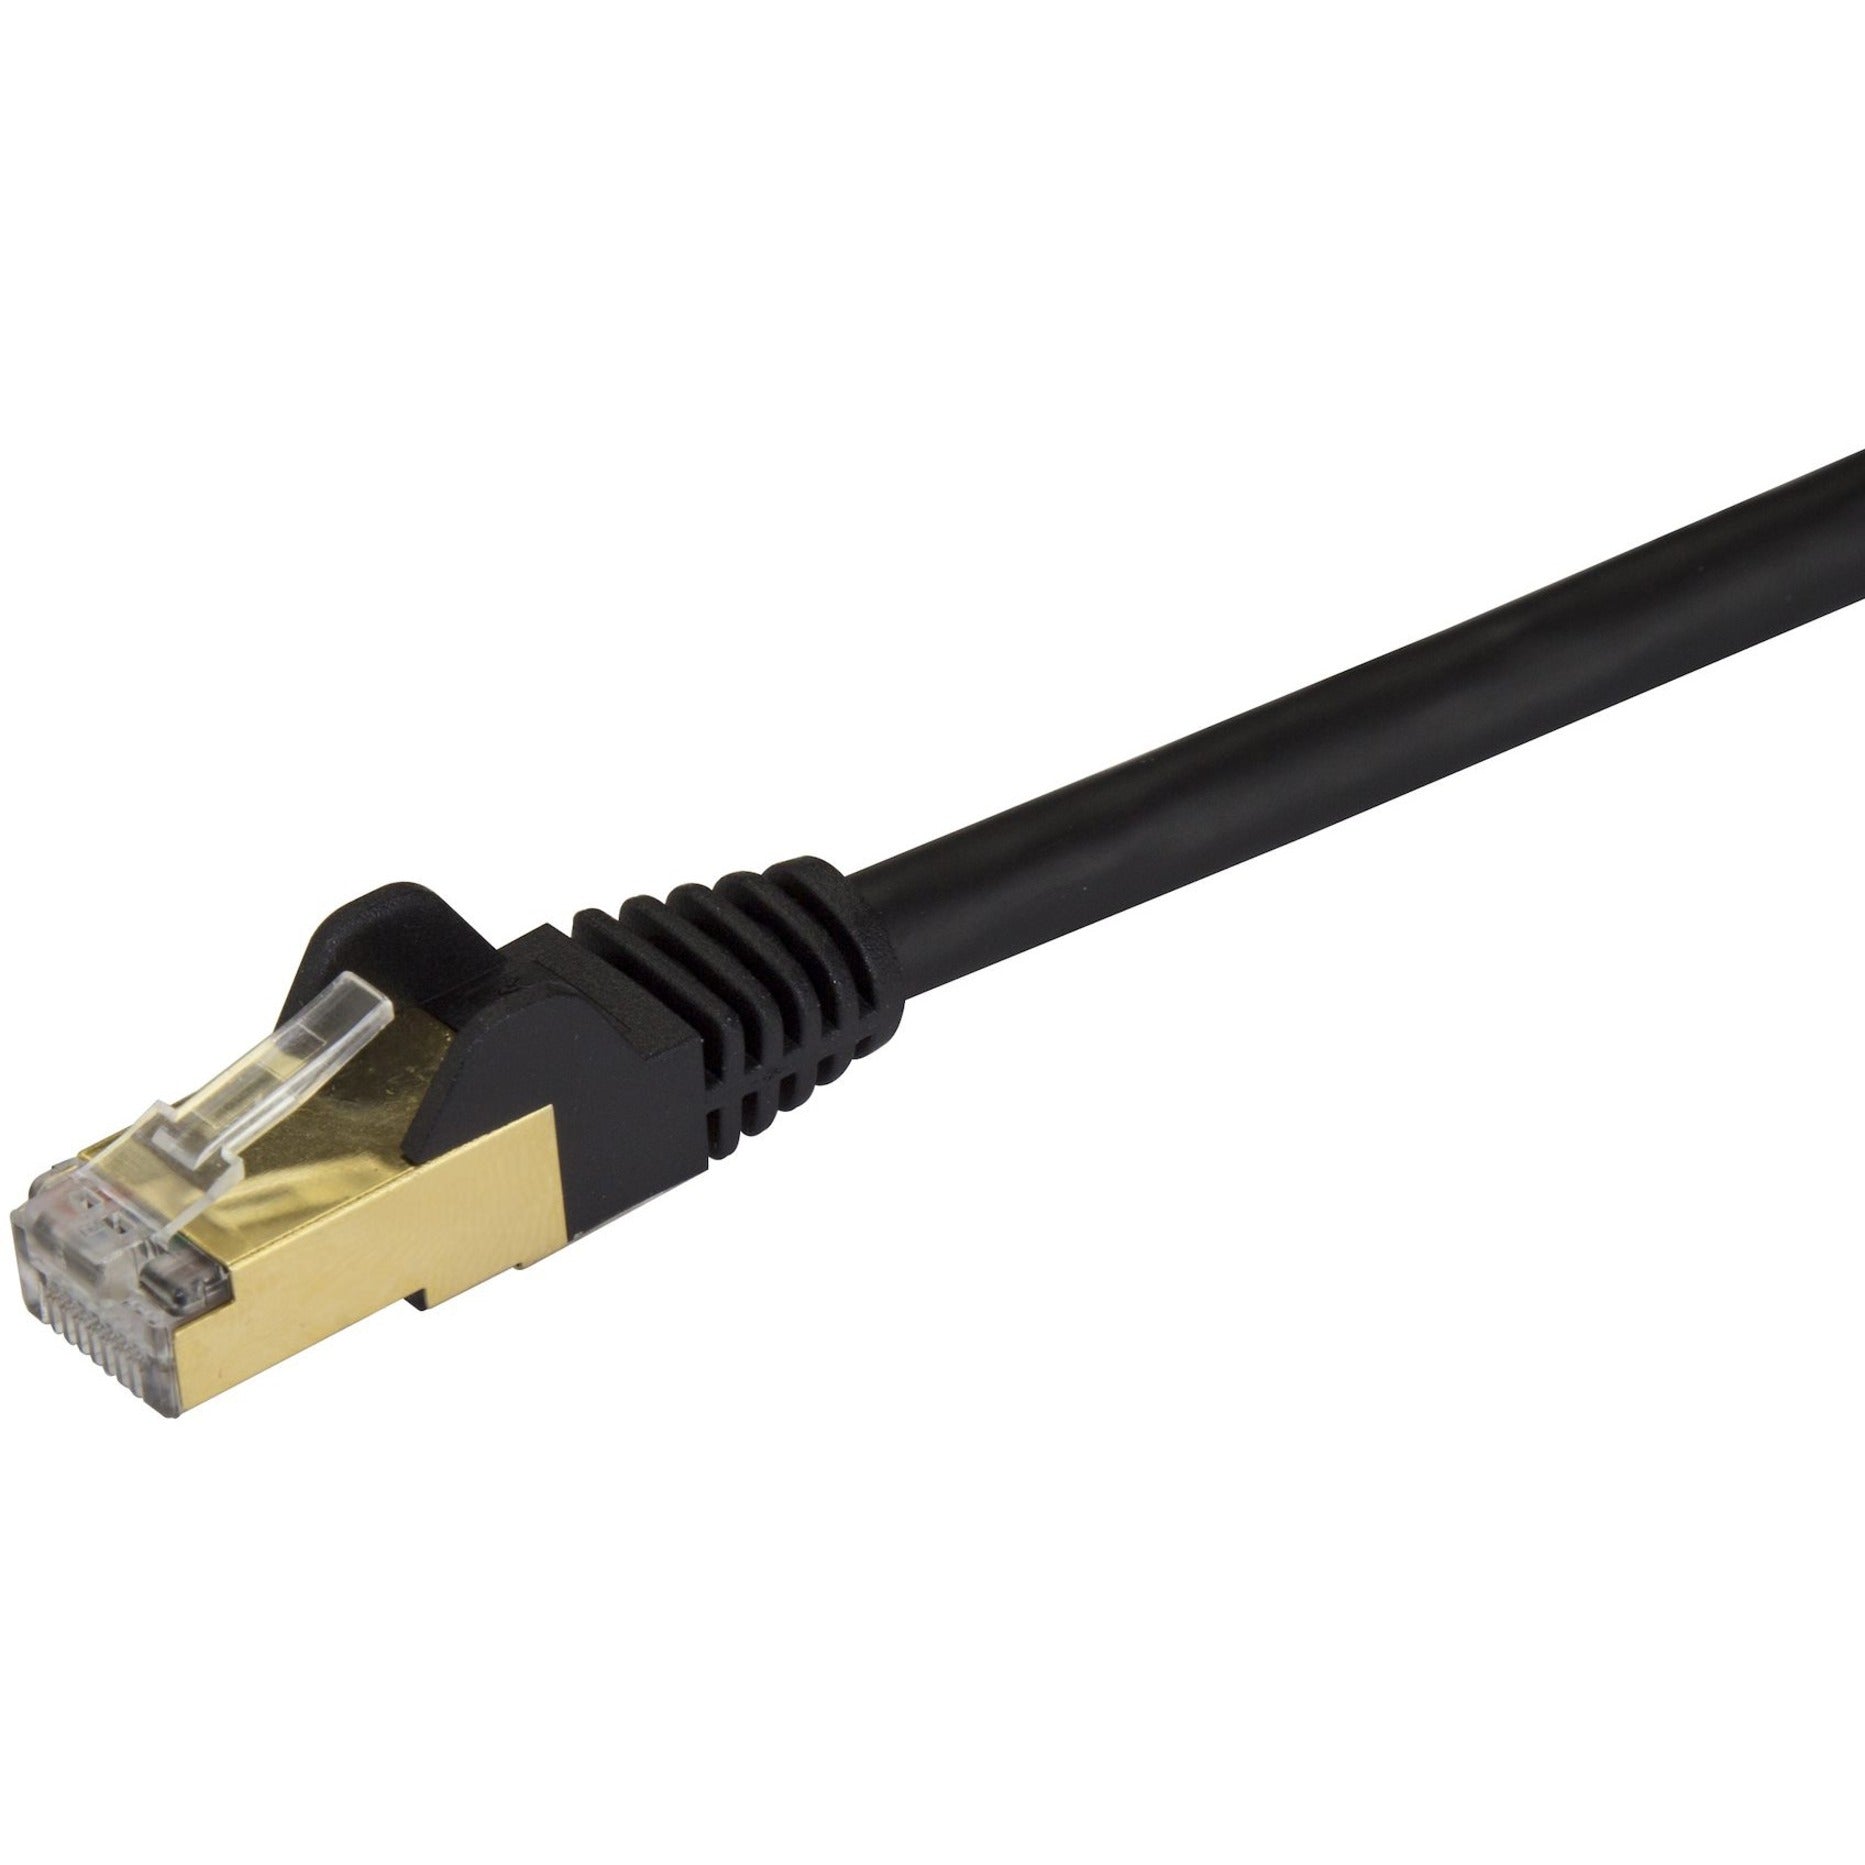 StarTech.com C6ASPAT5BK Cat6a Ethernet Patch Cable - Shielded (STP) - 5 ft., Black, Snagless RJ45 Ethernet Cord